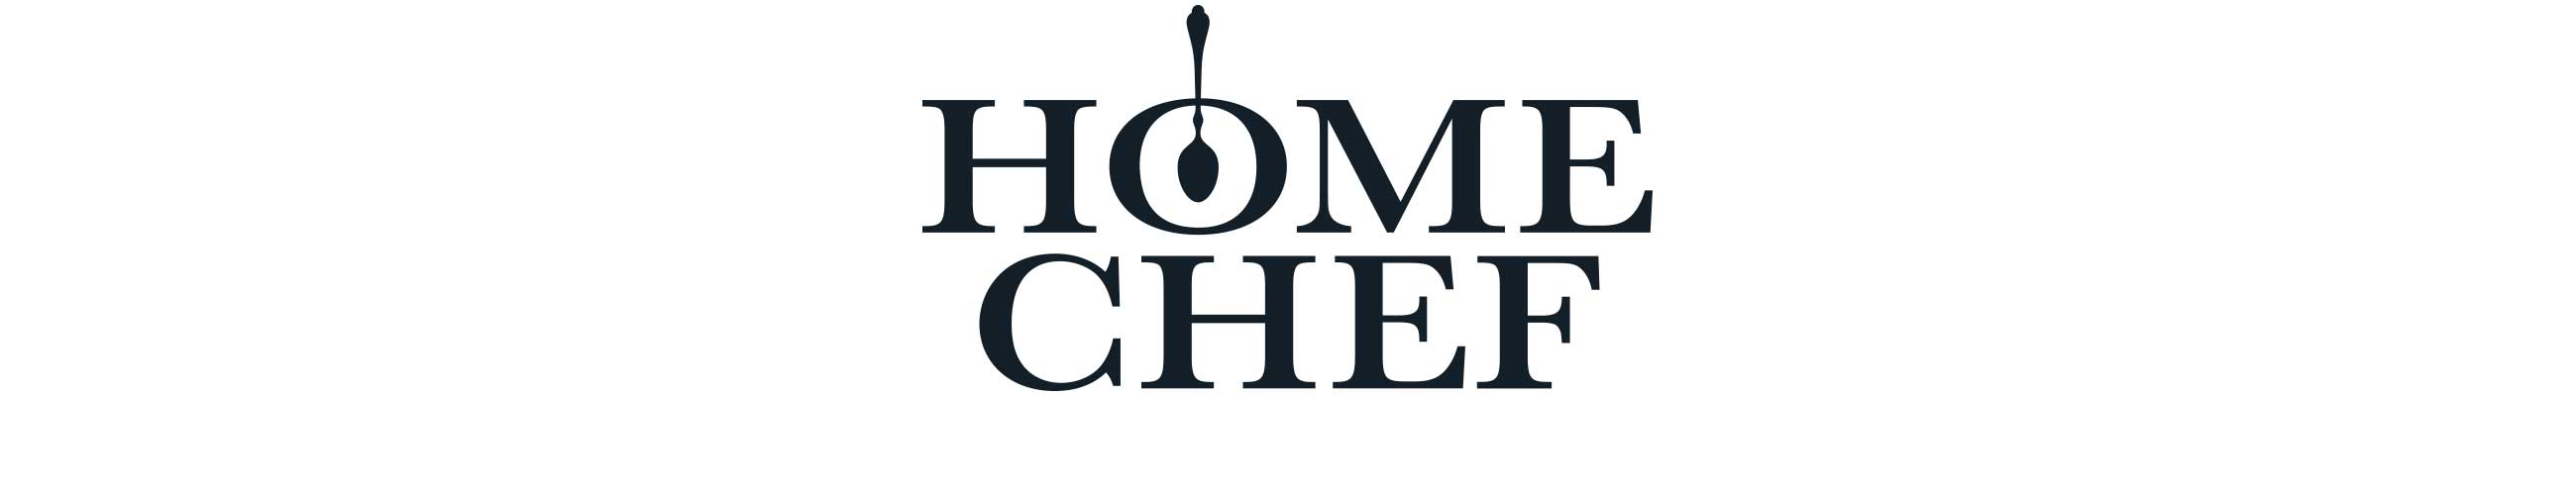 Salsus Home Chef broth Kraft logo. Visuell identitet visual identity.